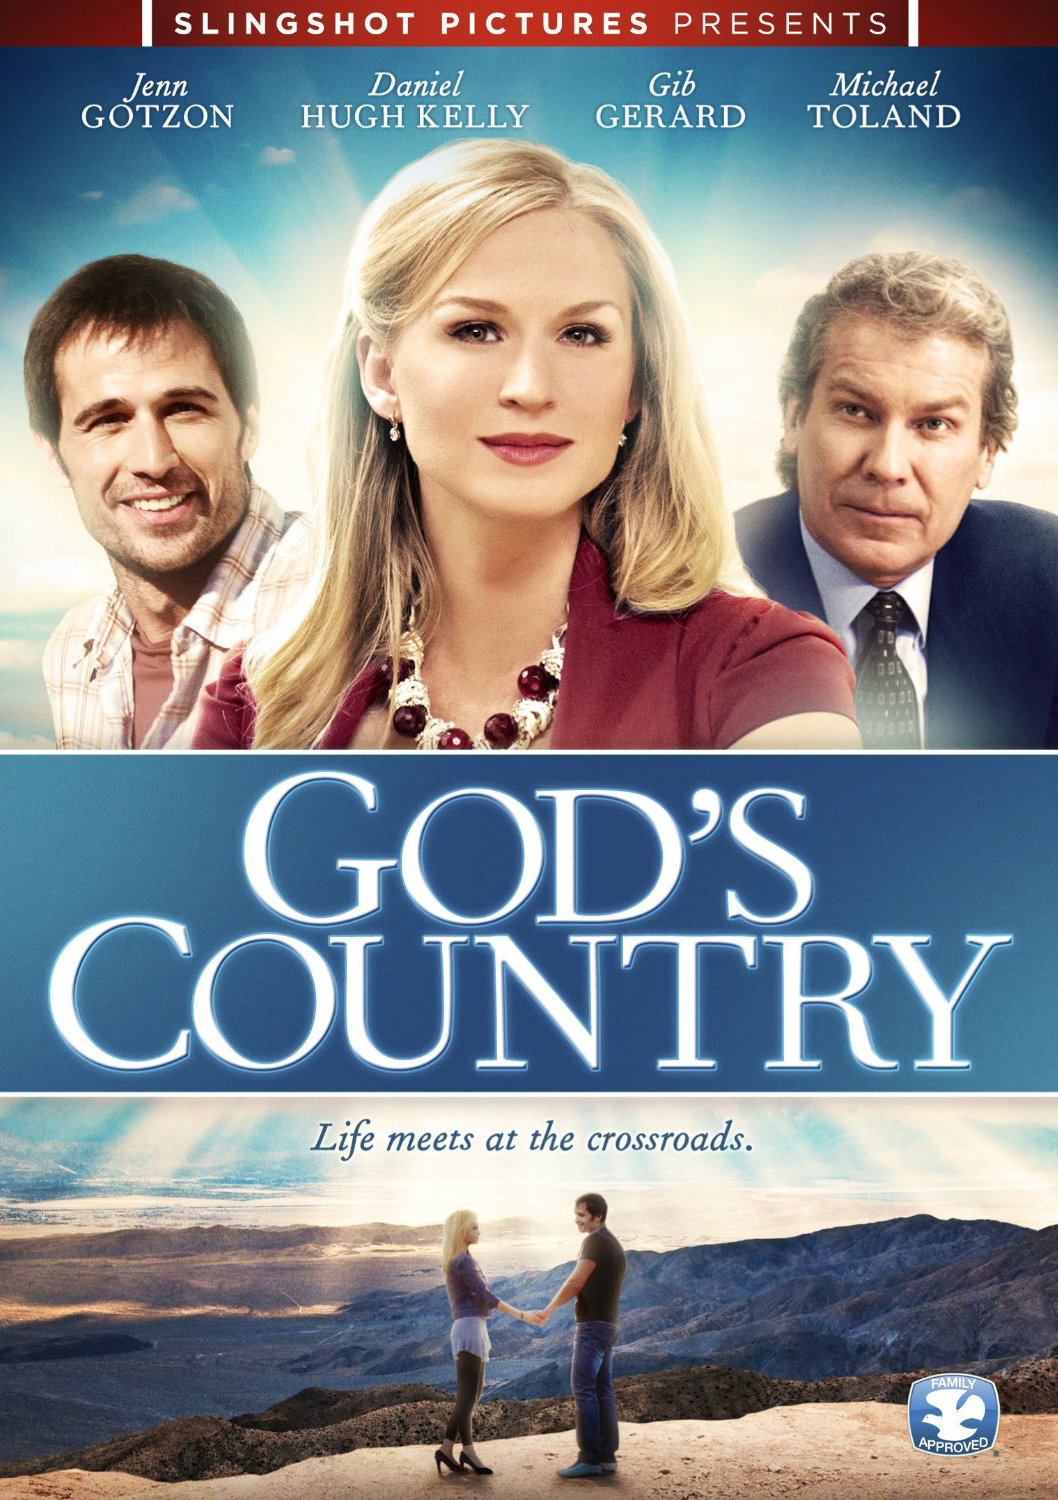 ww1.prweb.com/prfiles/2015/02/04/12495825/Gods-Country-Christian-Movie-Christian-Film-DVD-Jenn-Gotzon2.jpg